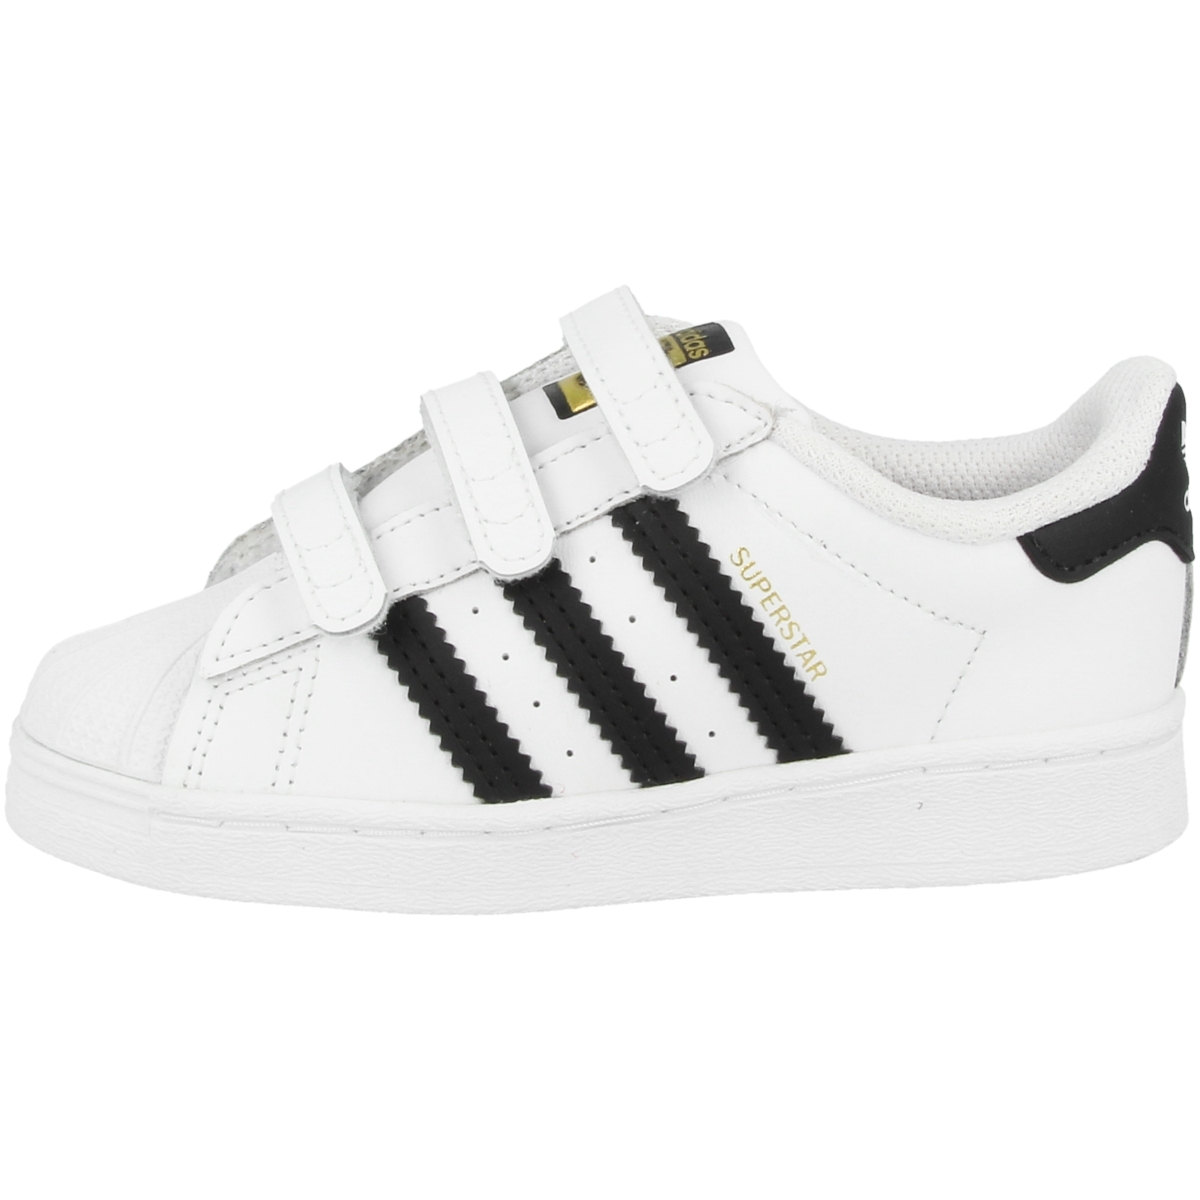 Adidas Superstar CF I Kinderschuhe Sneaker Infant Freizeit Schuhe  Turnschuhe | eBay